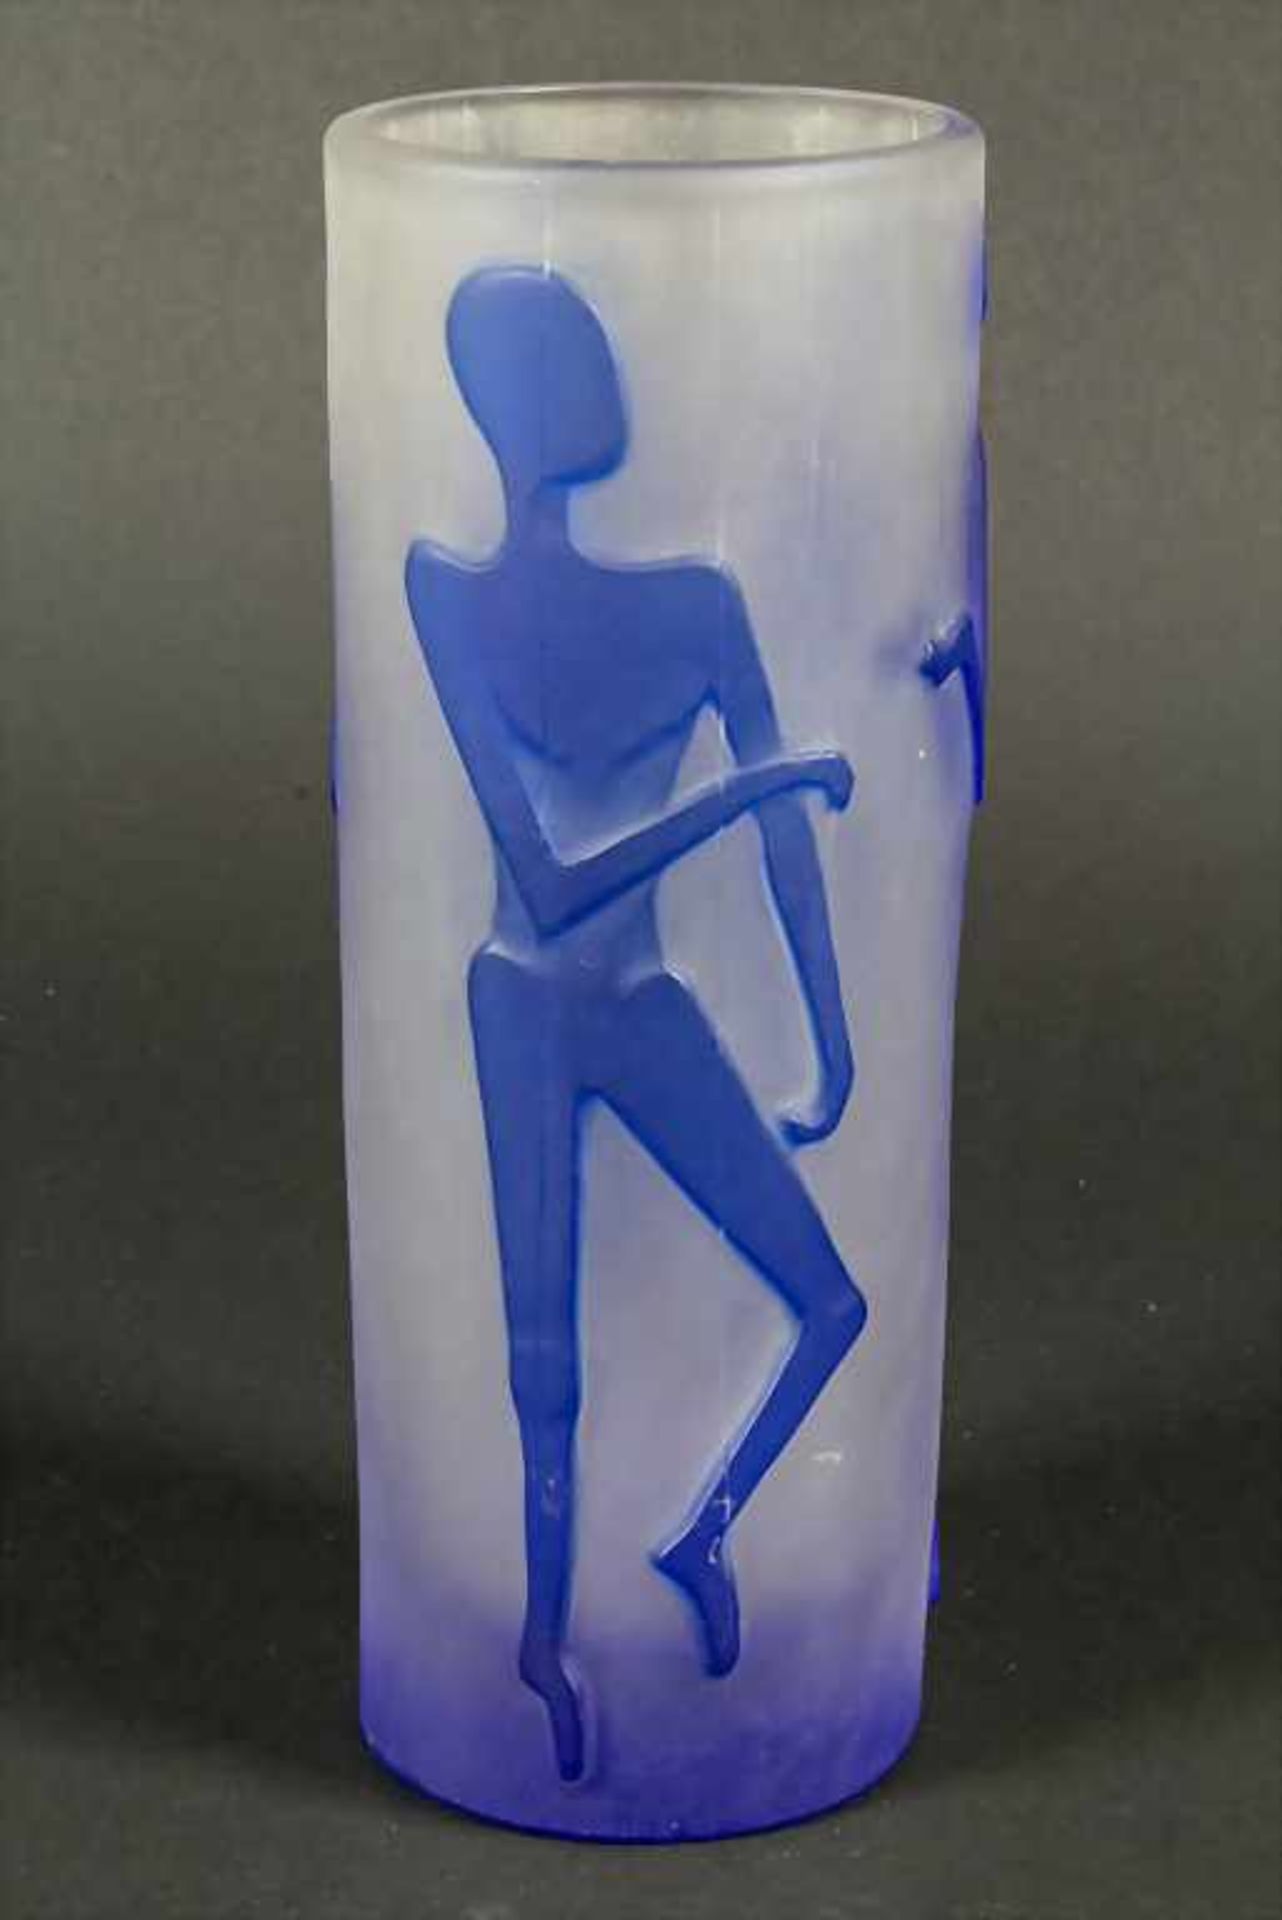 Studio-Glasziervase / A decorative studio glass vase, wohl Böhmen, um 1980 - Image 2 of 4